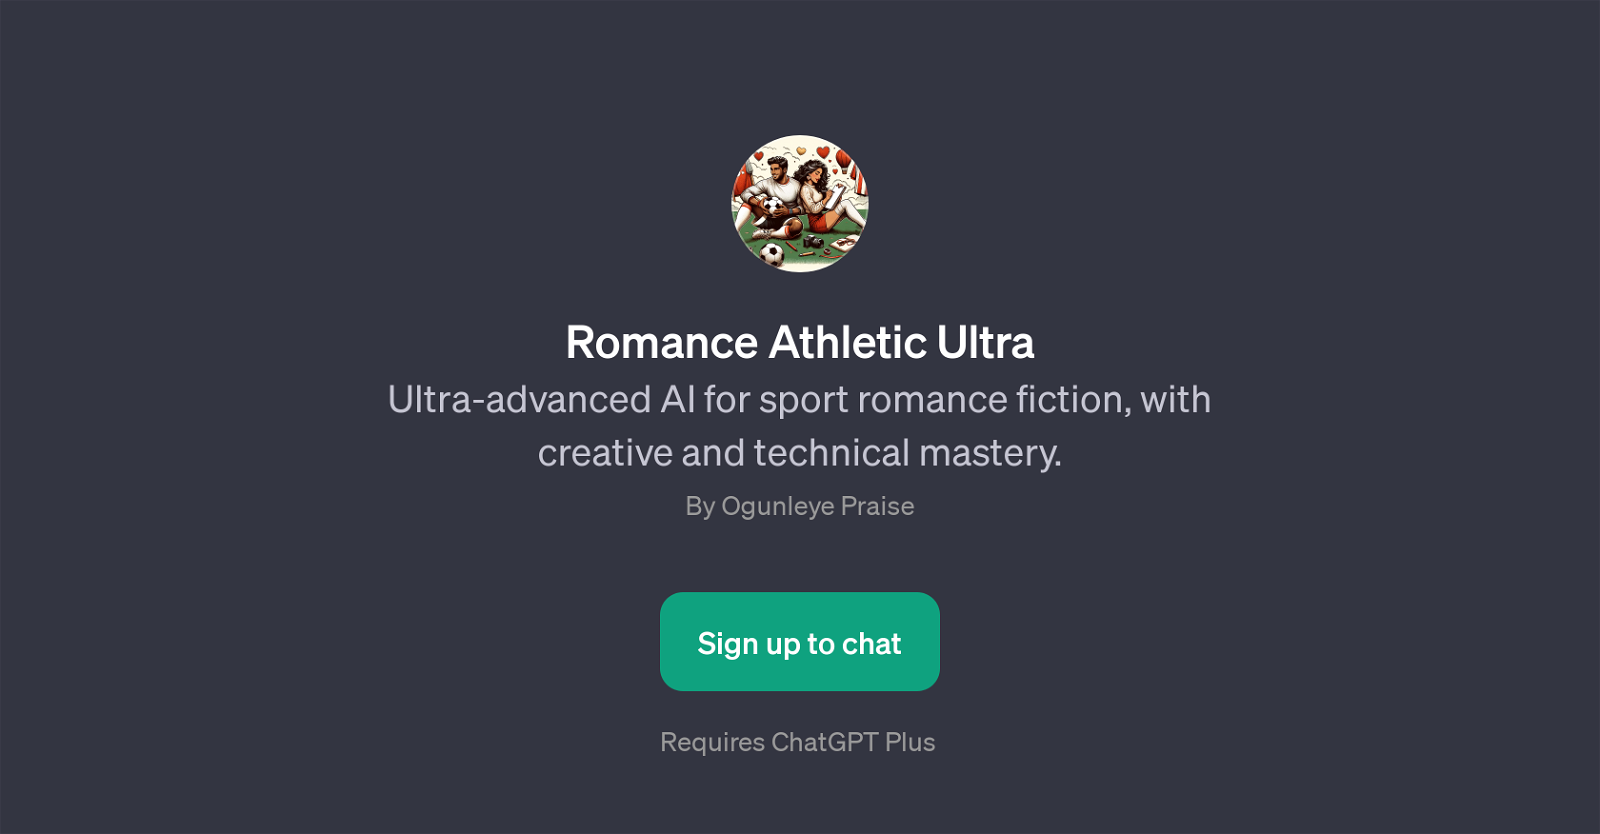 Romance Athletic Ultra website